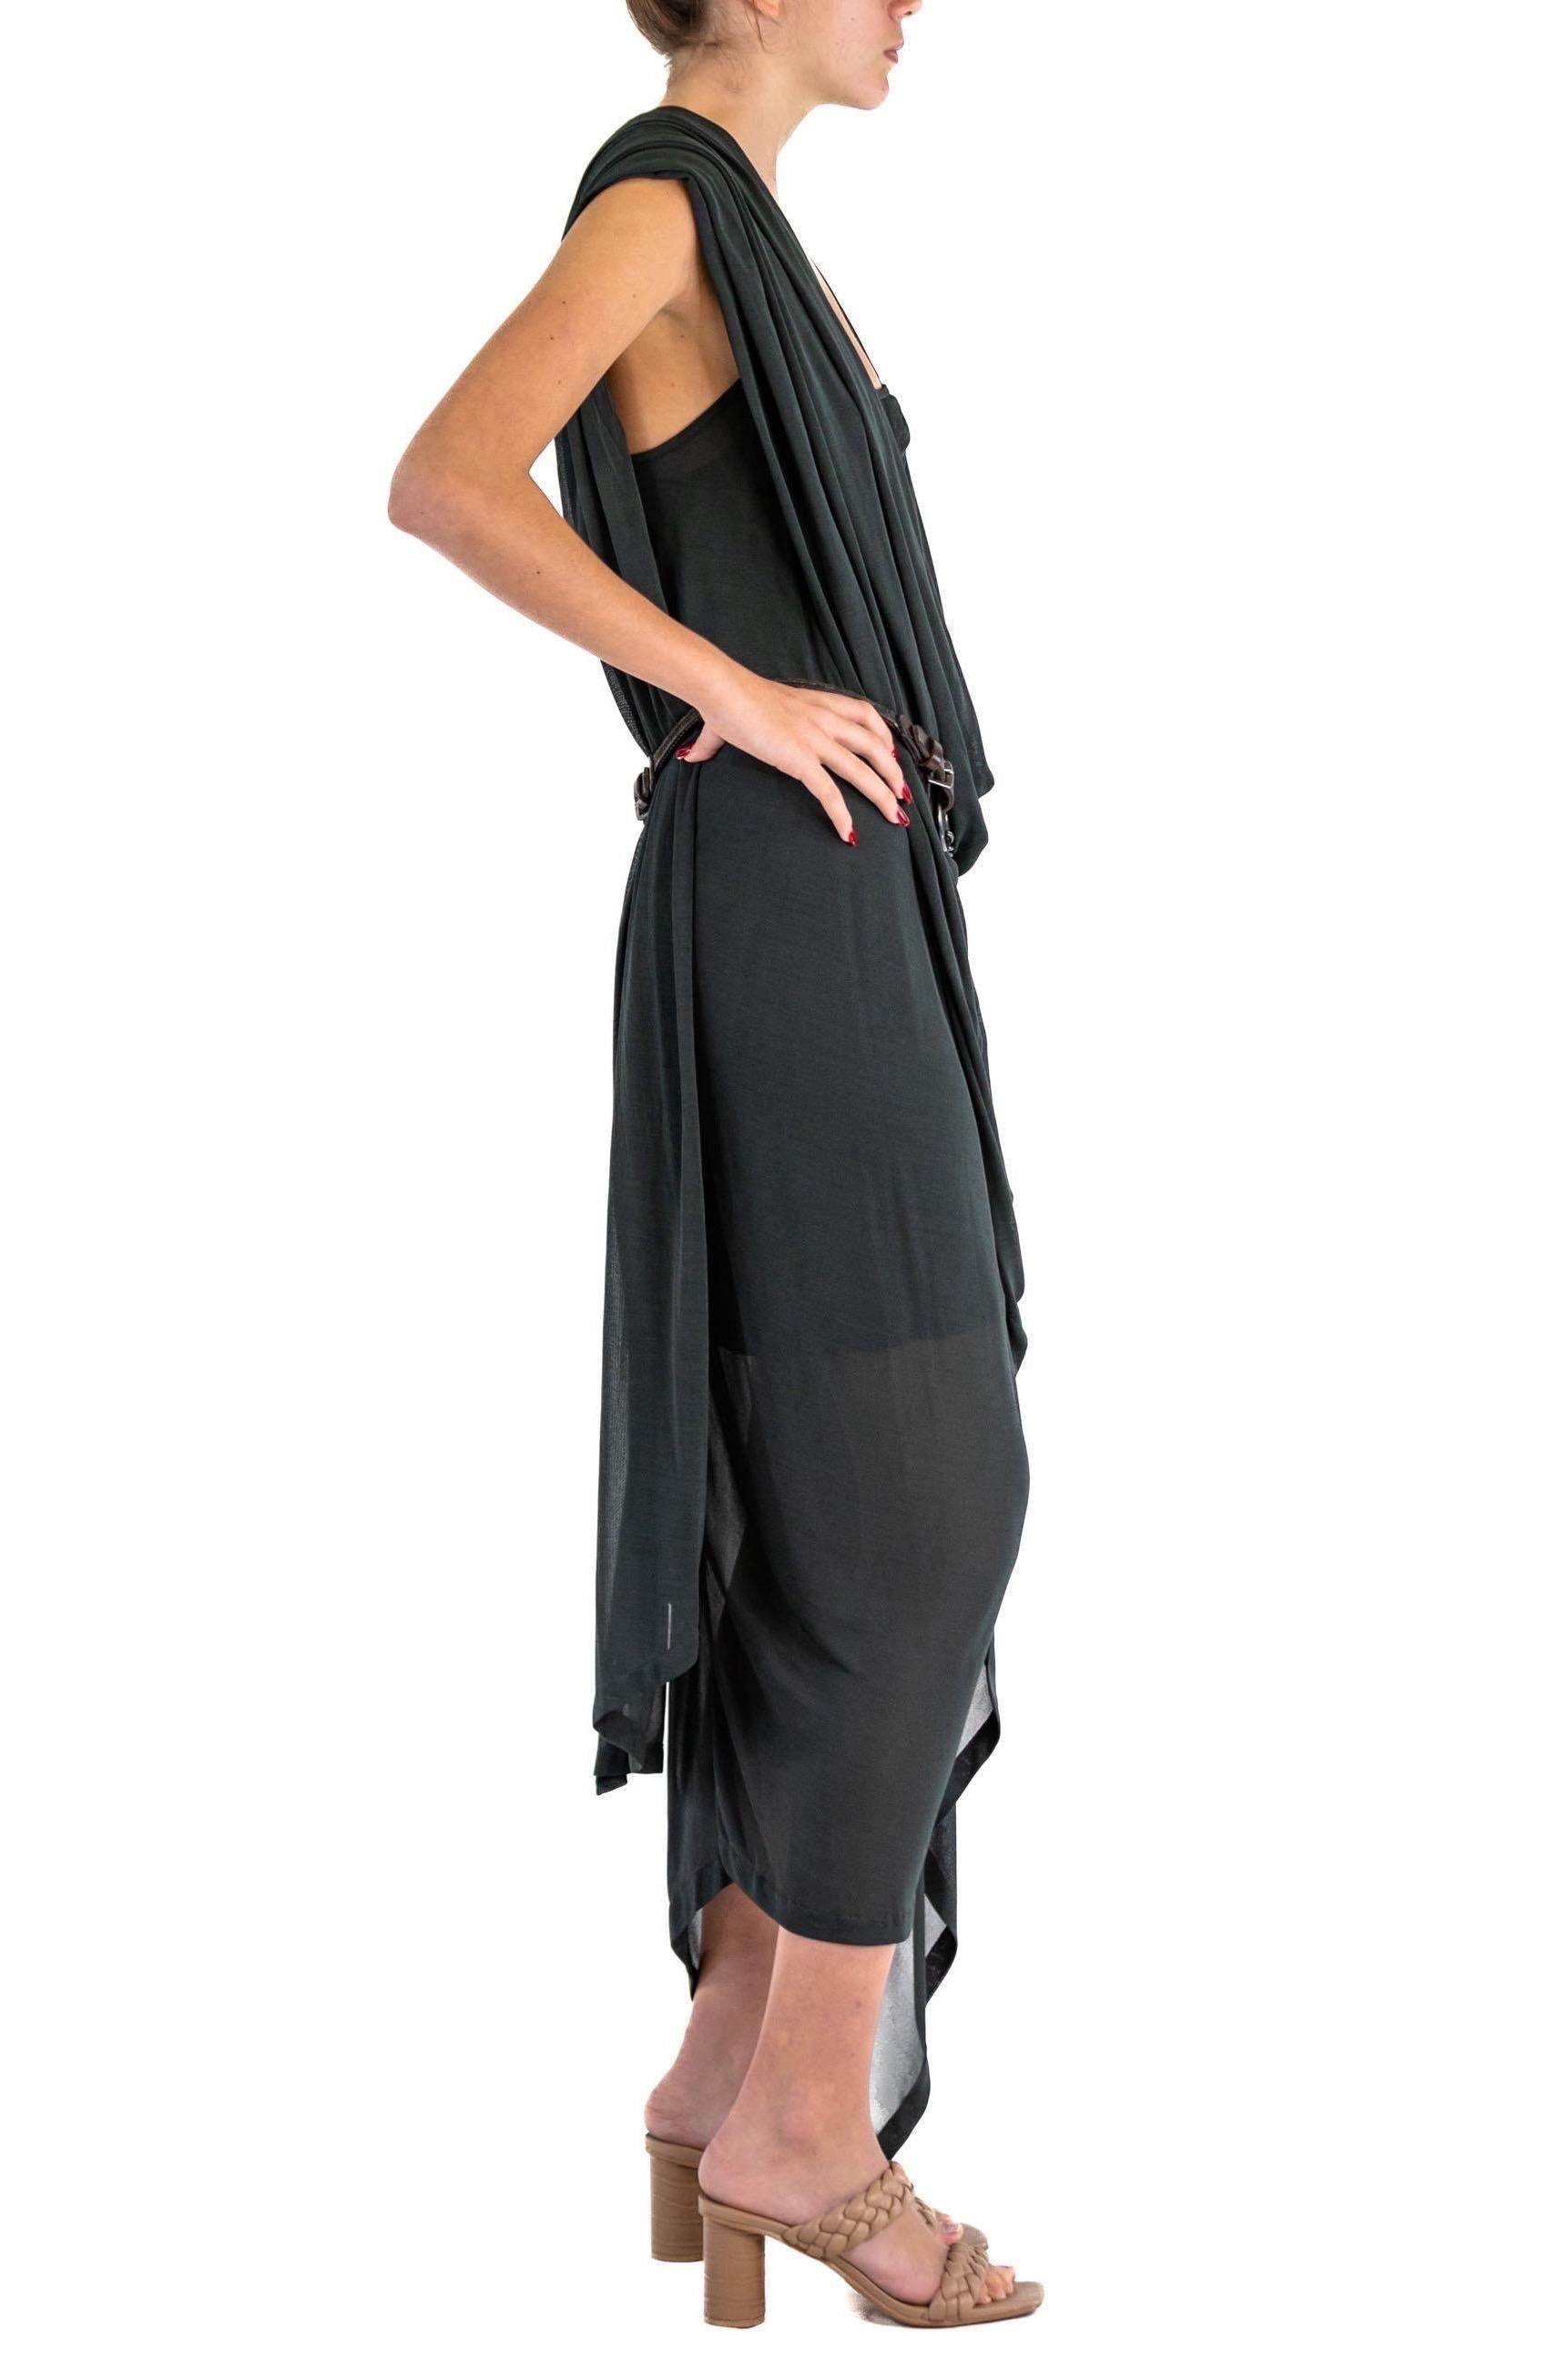 Fabric has stretch 1990S DONNA KARAN Black Rayon Blend Layered Dress With Equestrian Belt 